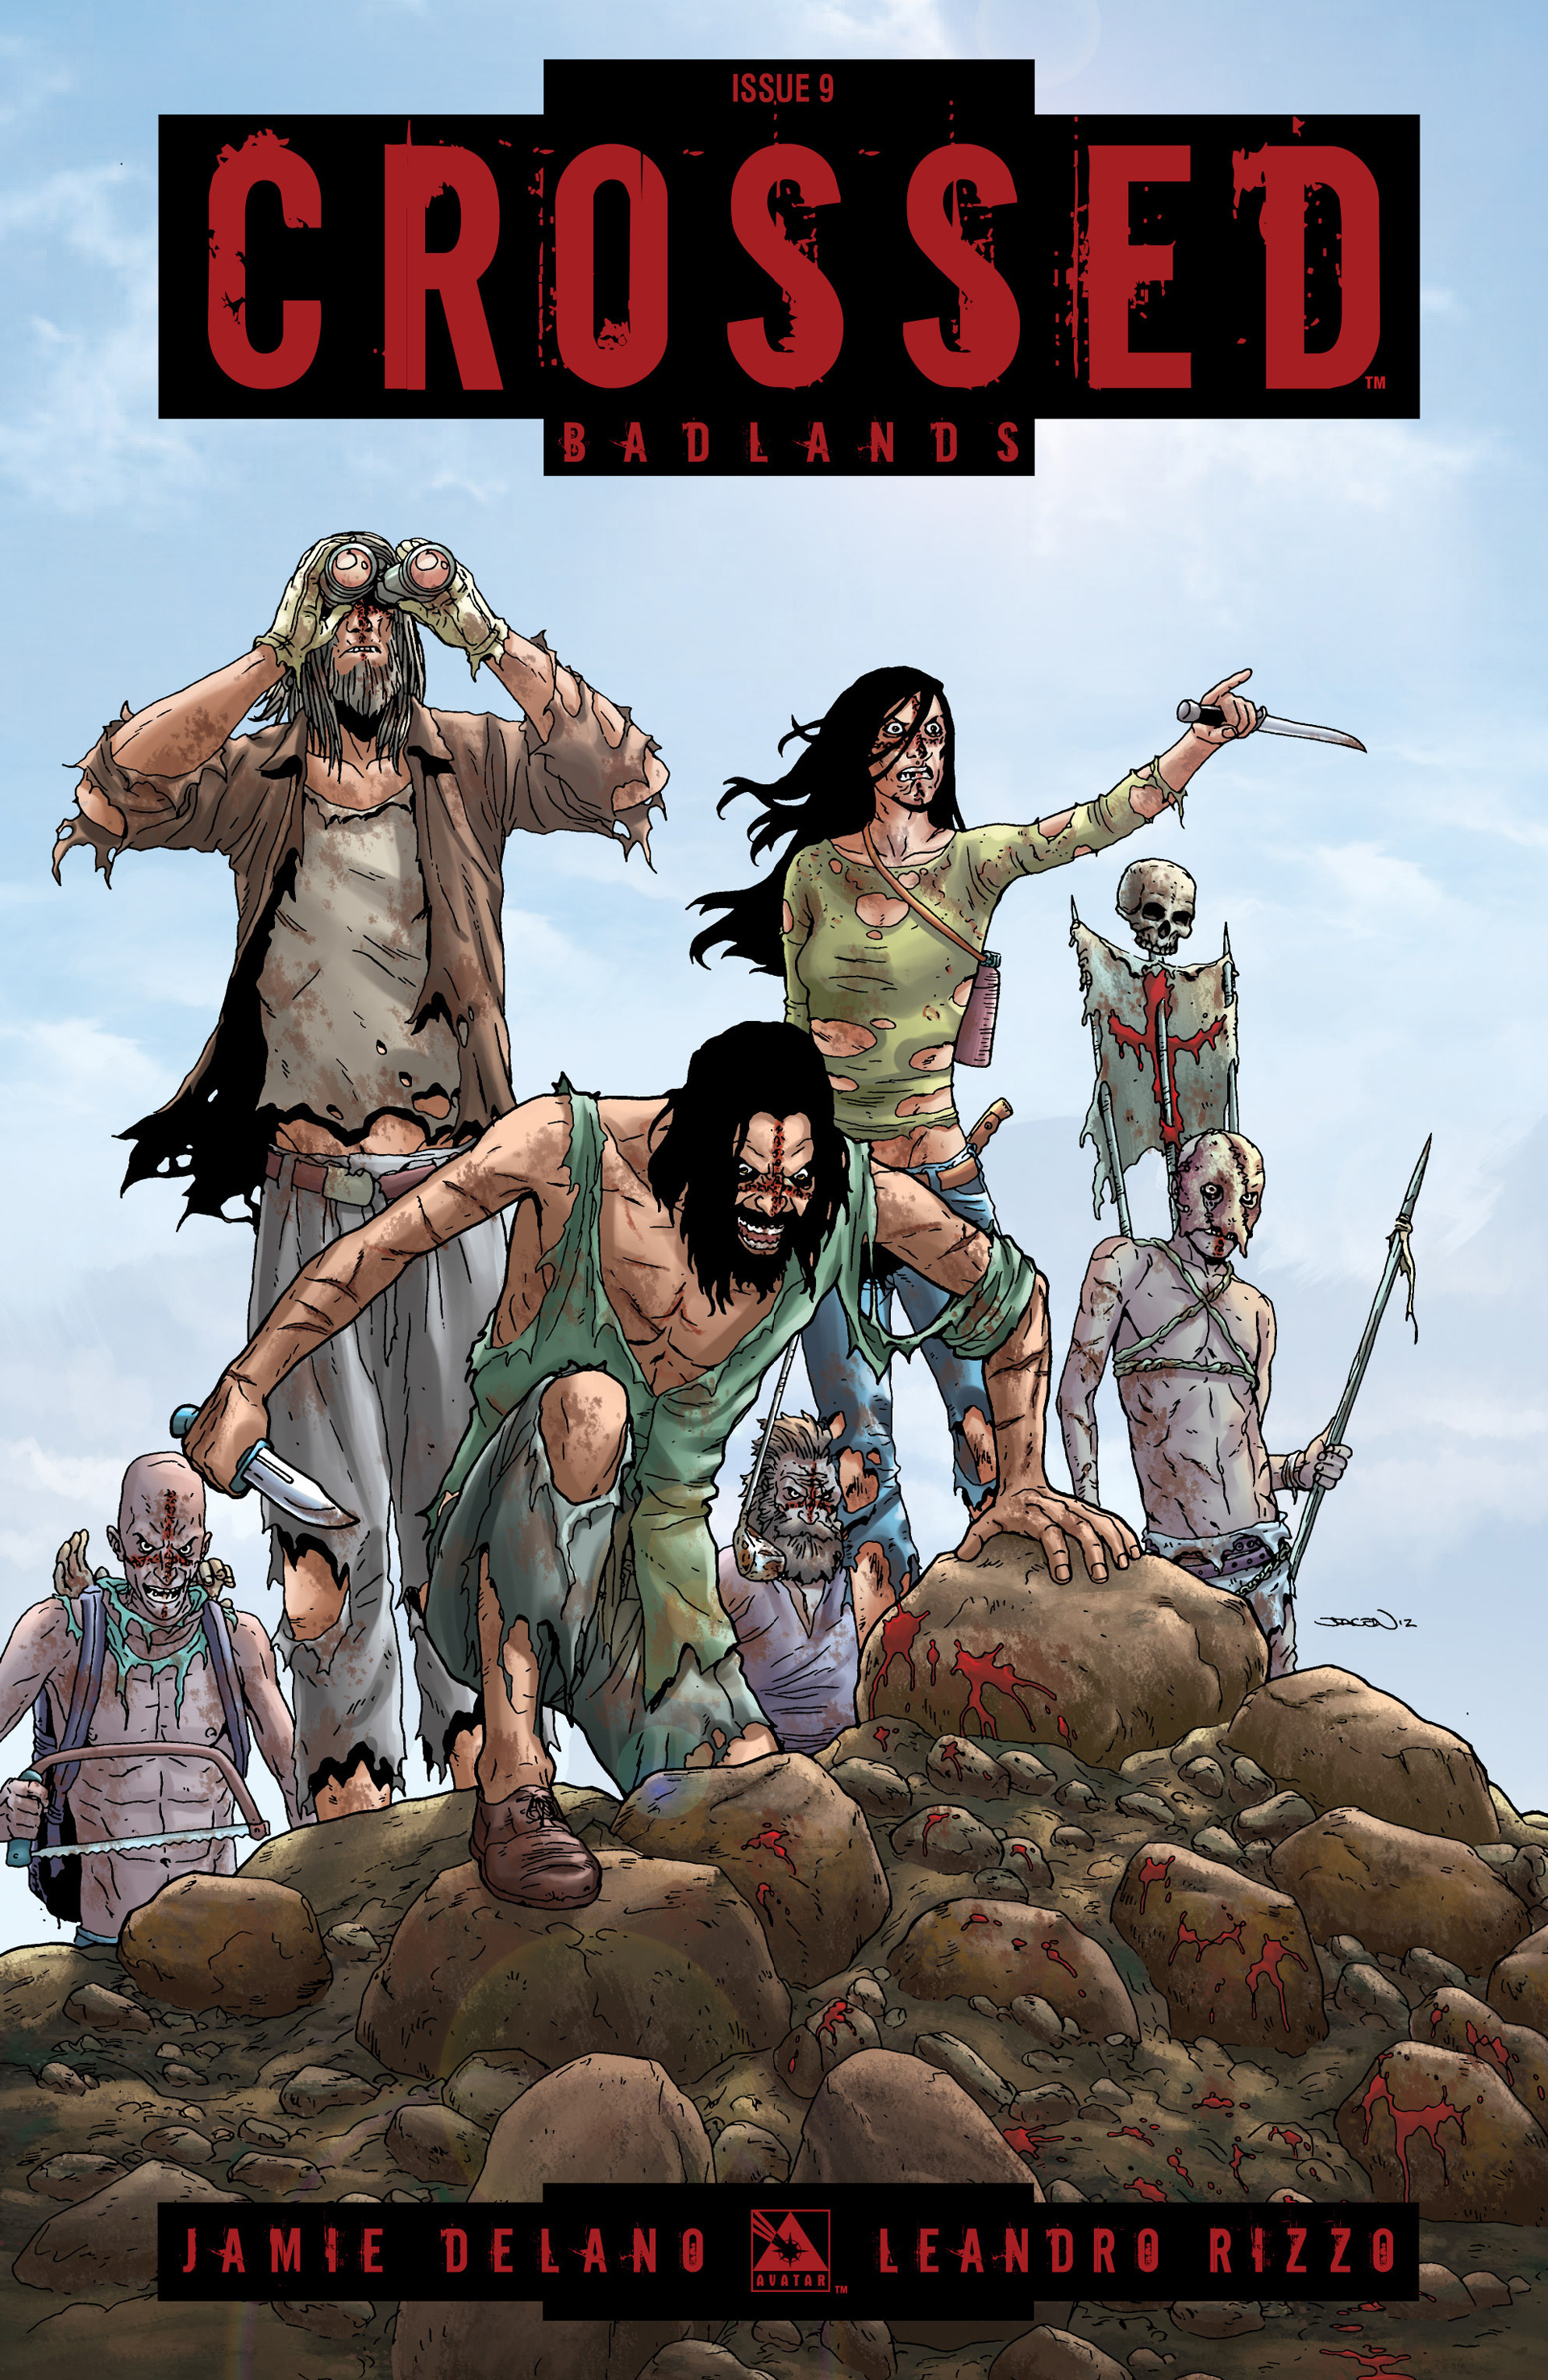 Read online Crossed: Badlands comic -  Issue #9 - 1